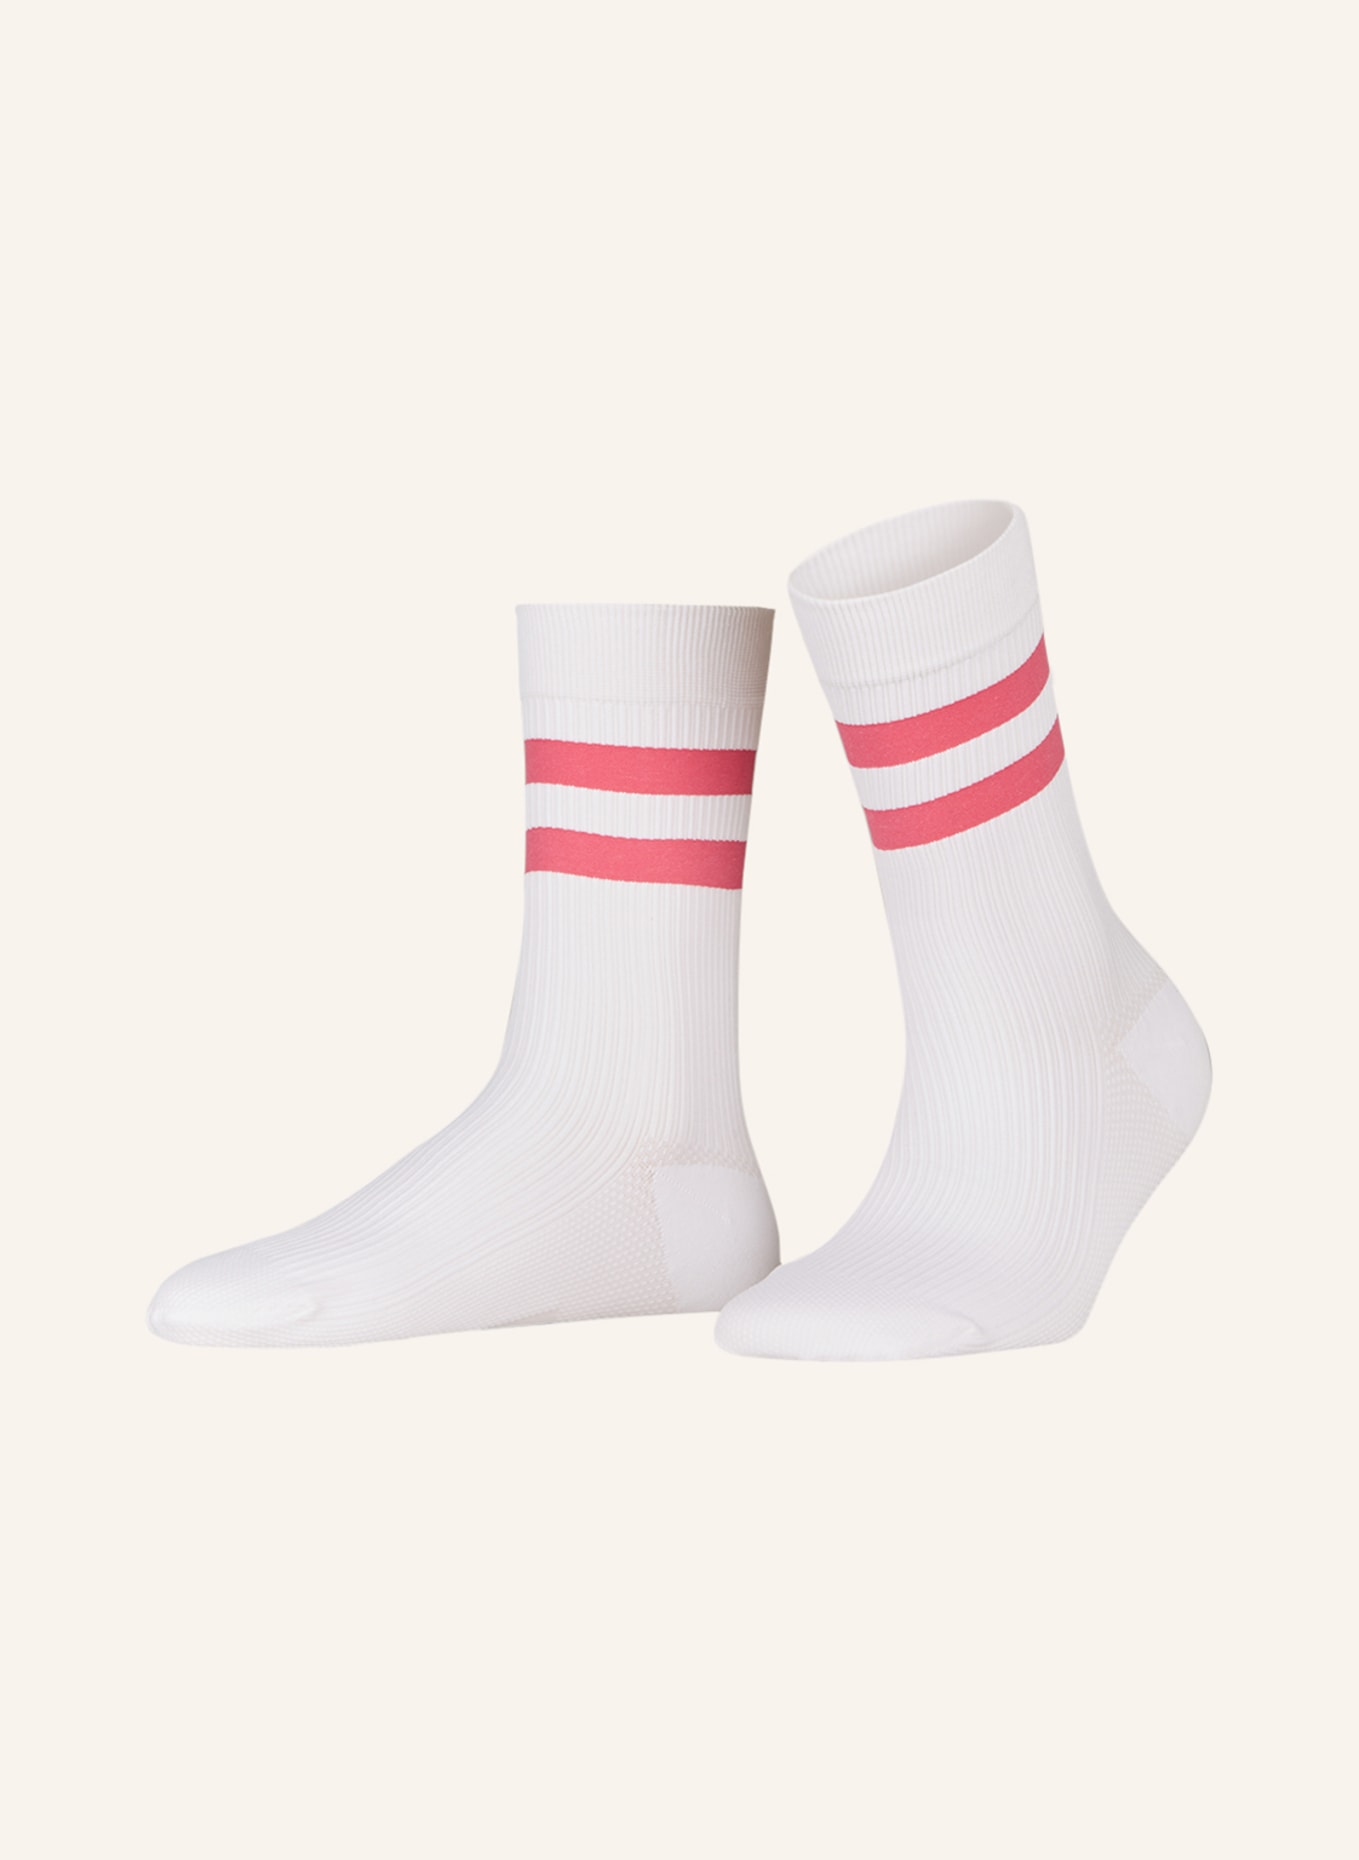 ITEM m6 Socken CONSCIOUS COTTON, Farbe: WEISS/ PINK (Bild 1)